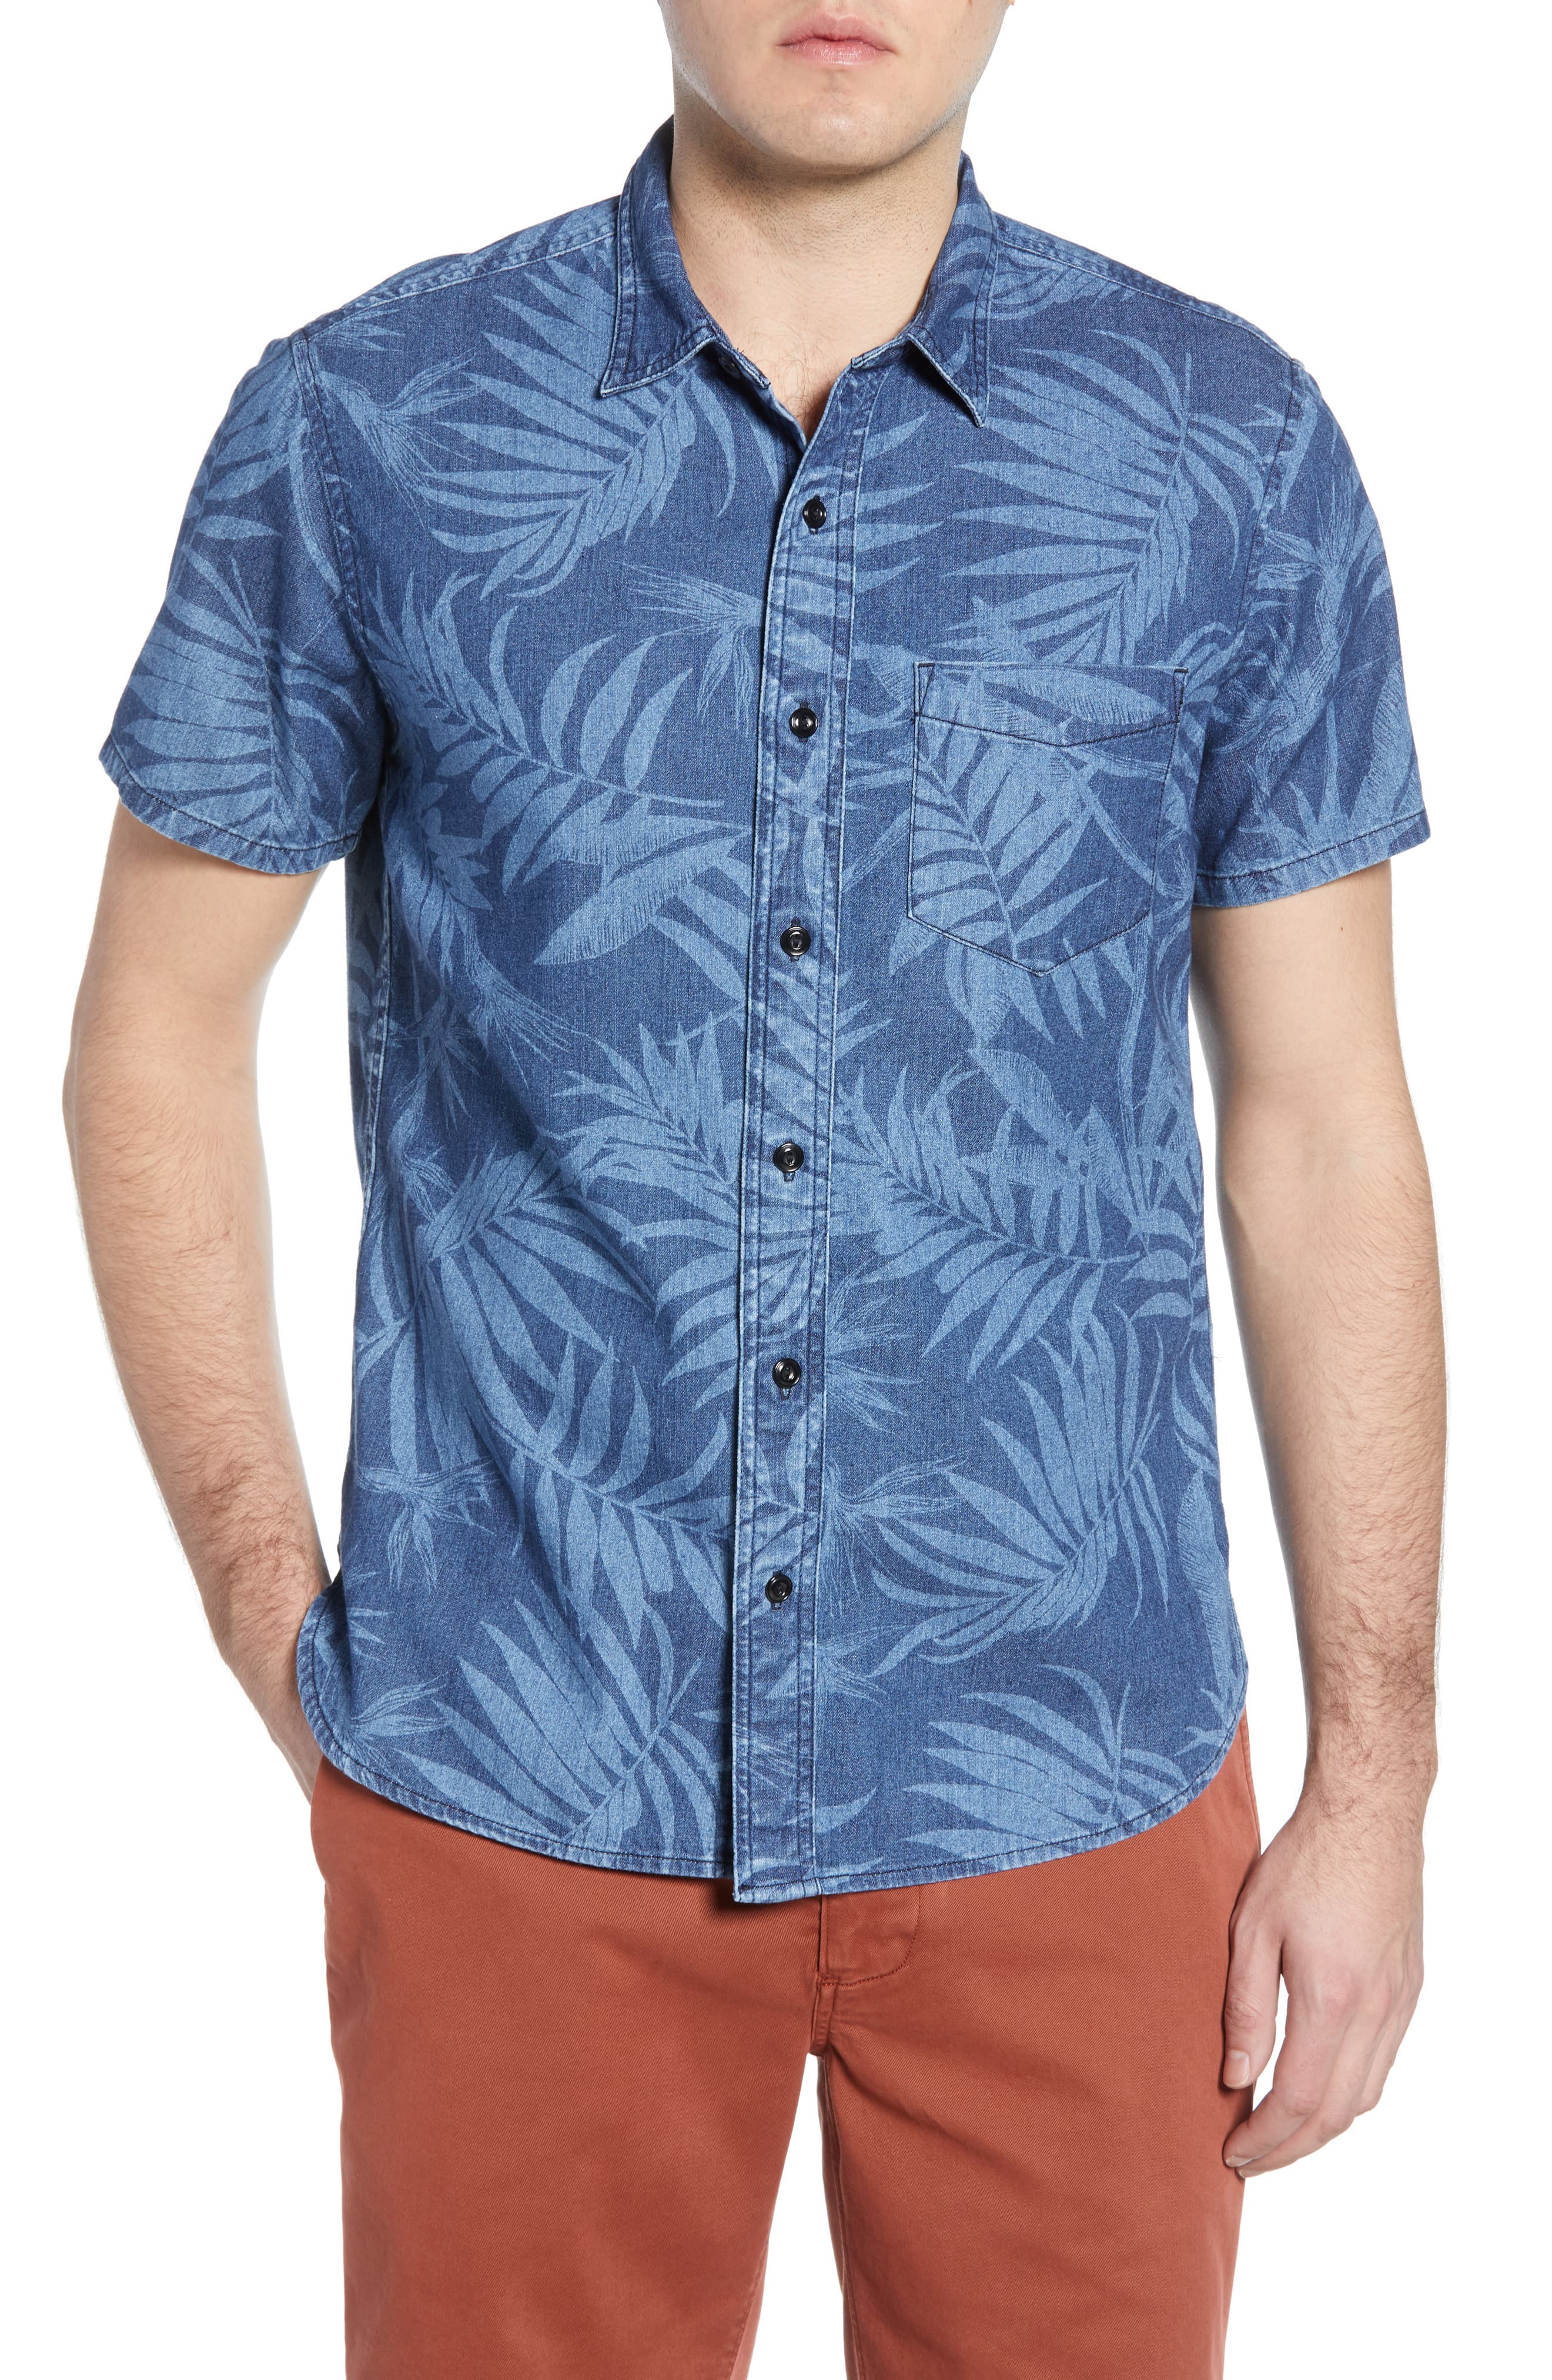 Men’s Madewell Leaf Print Chambray Shirt | The Fashionisto